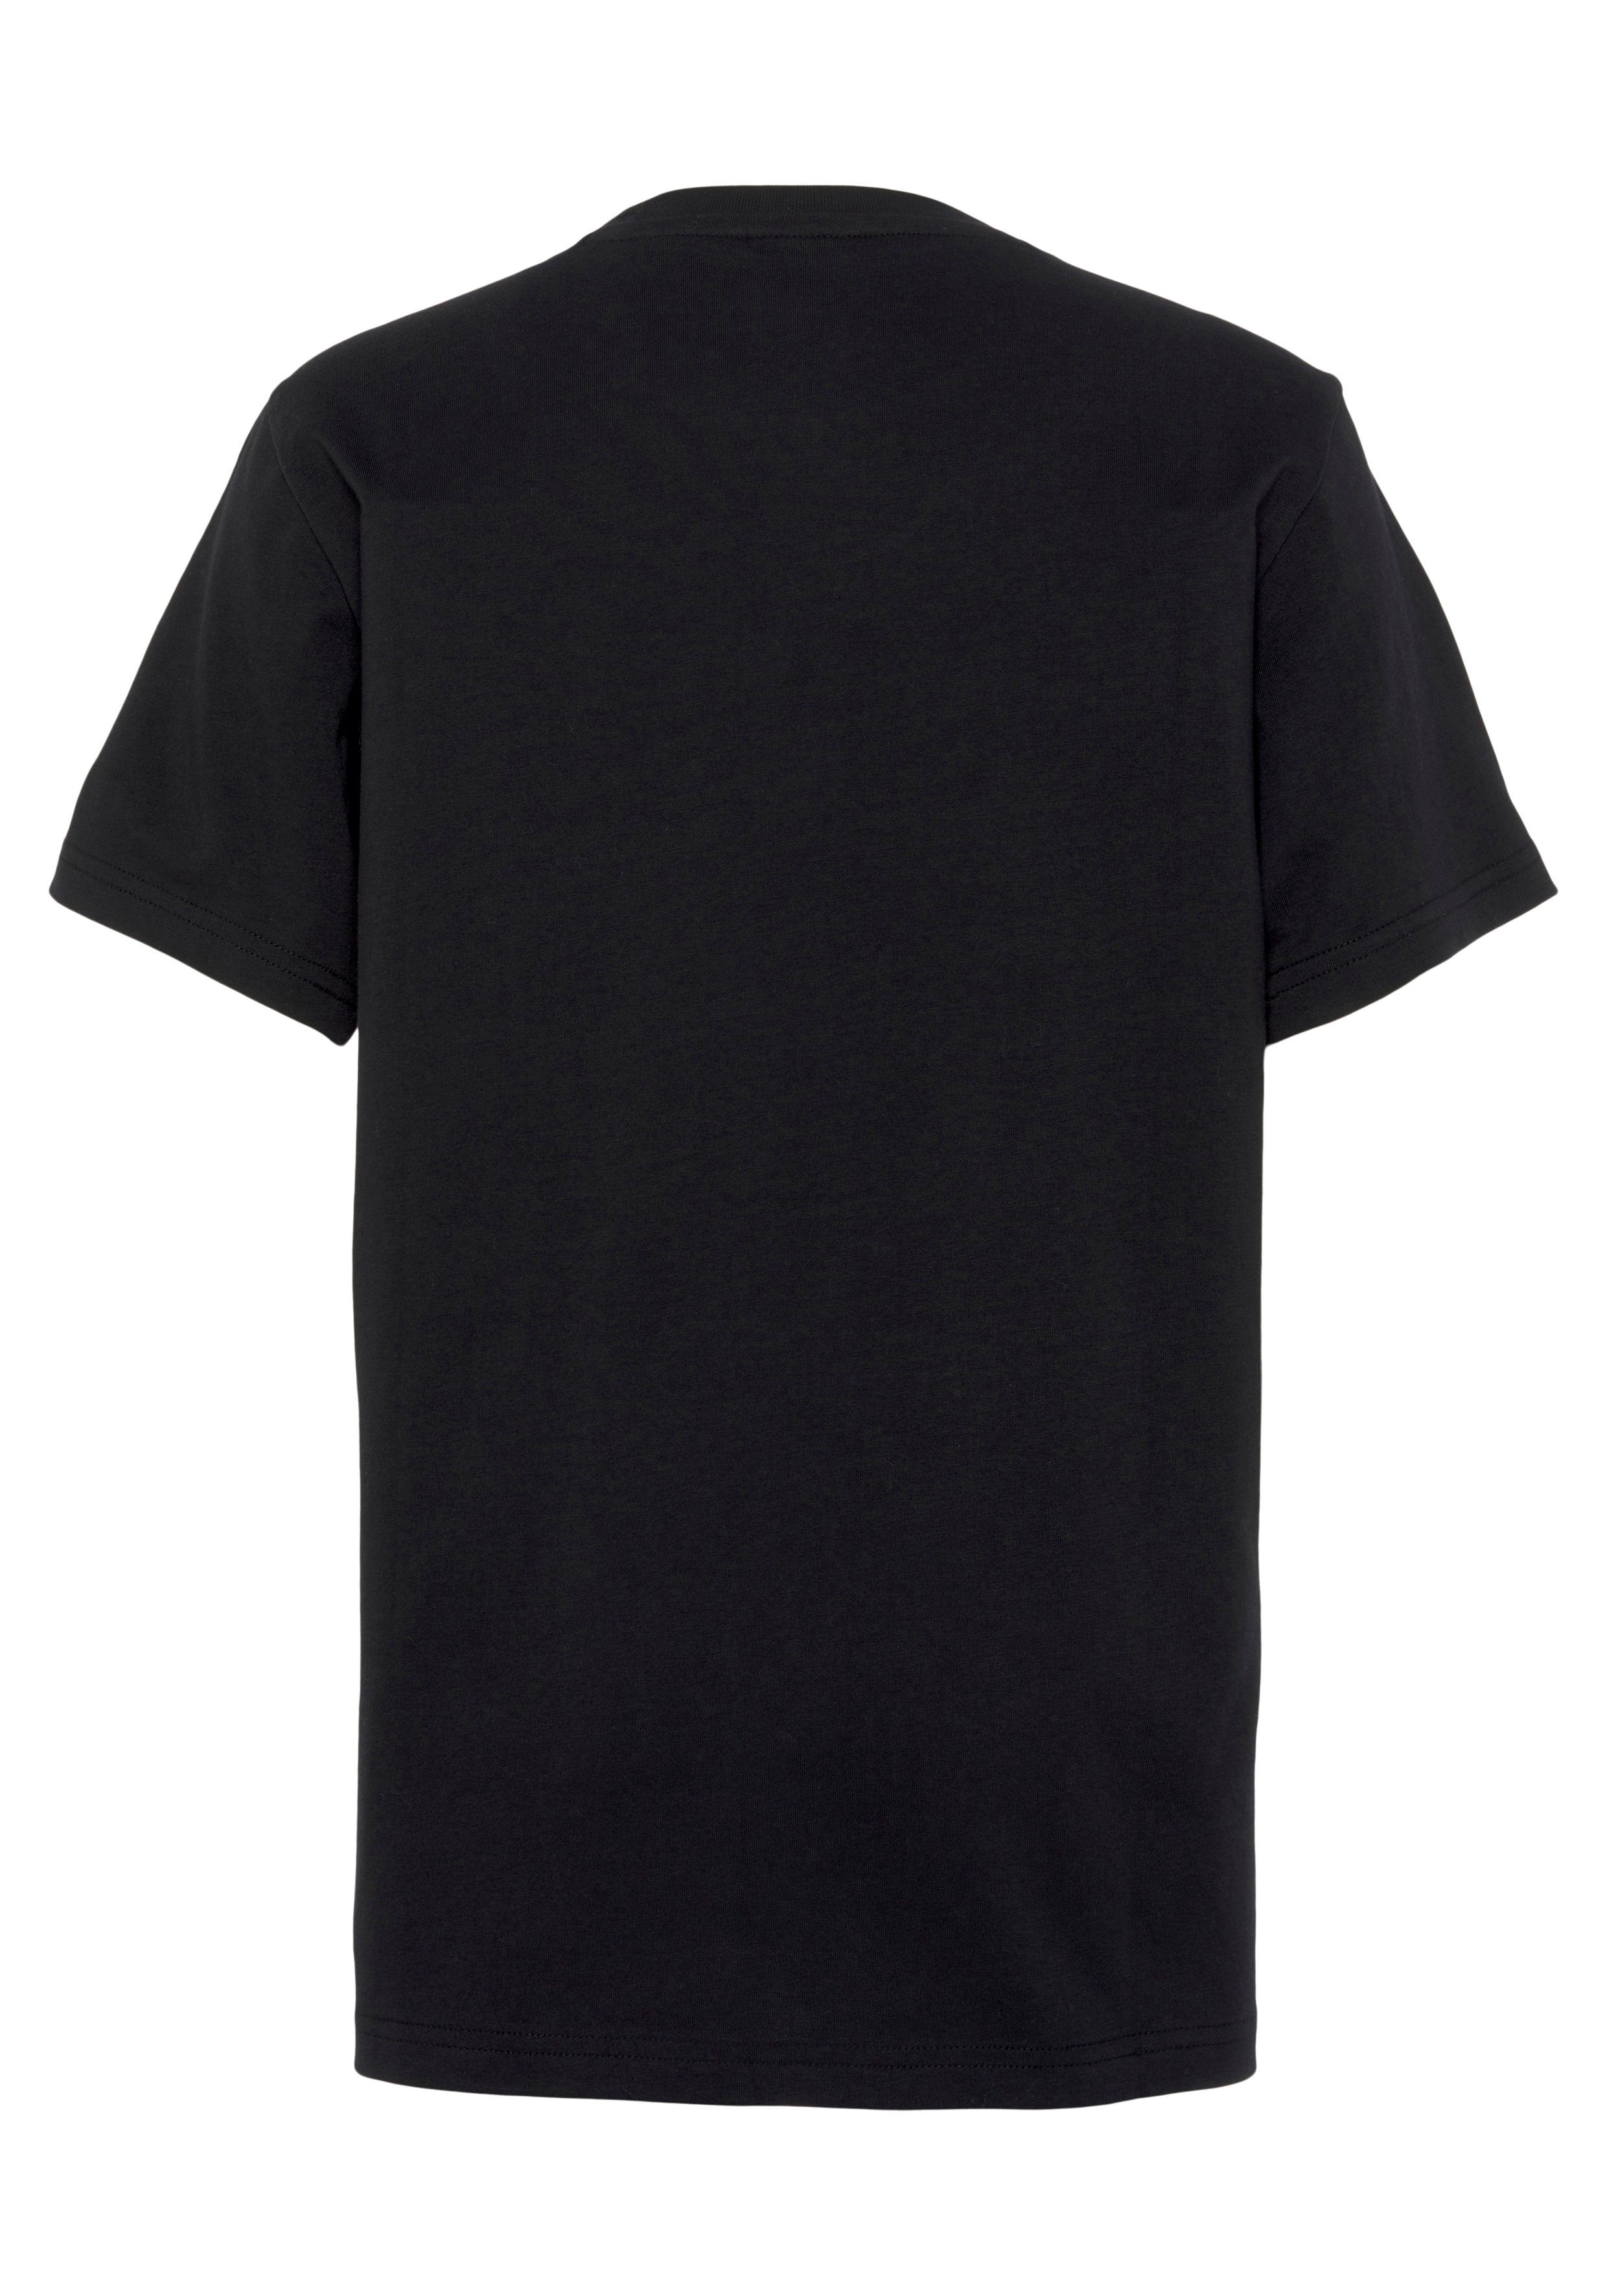 Champion T-Shirt Classic Crewneck Logo large schwarz für - Kinder T-Shirt